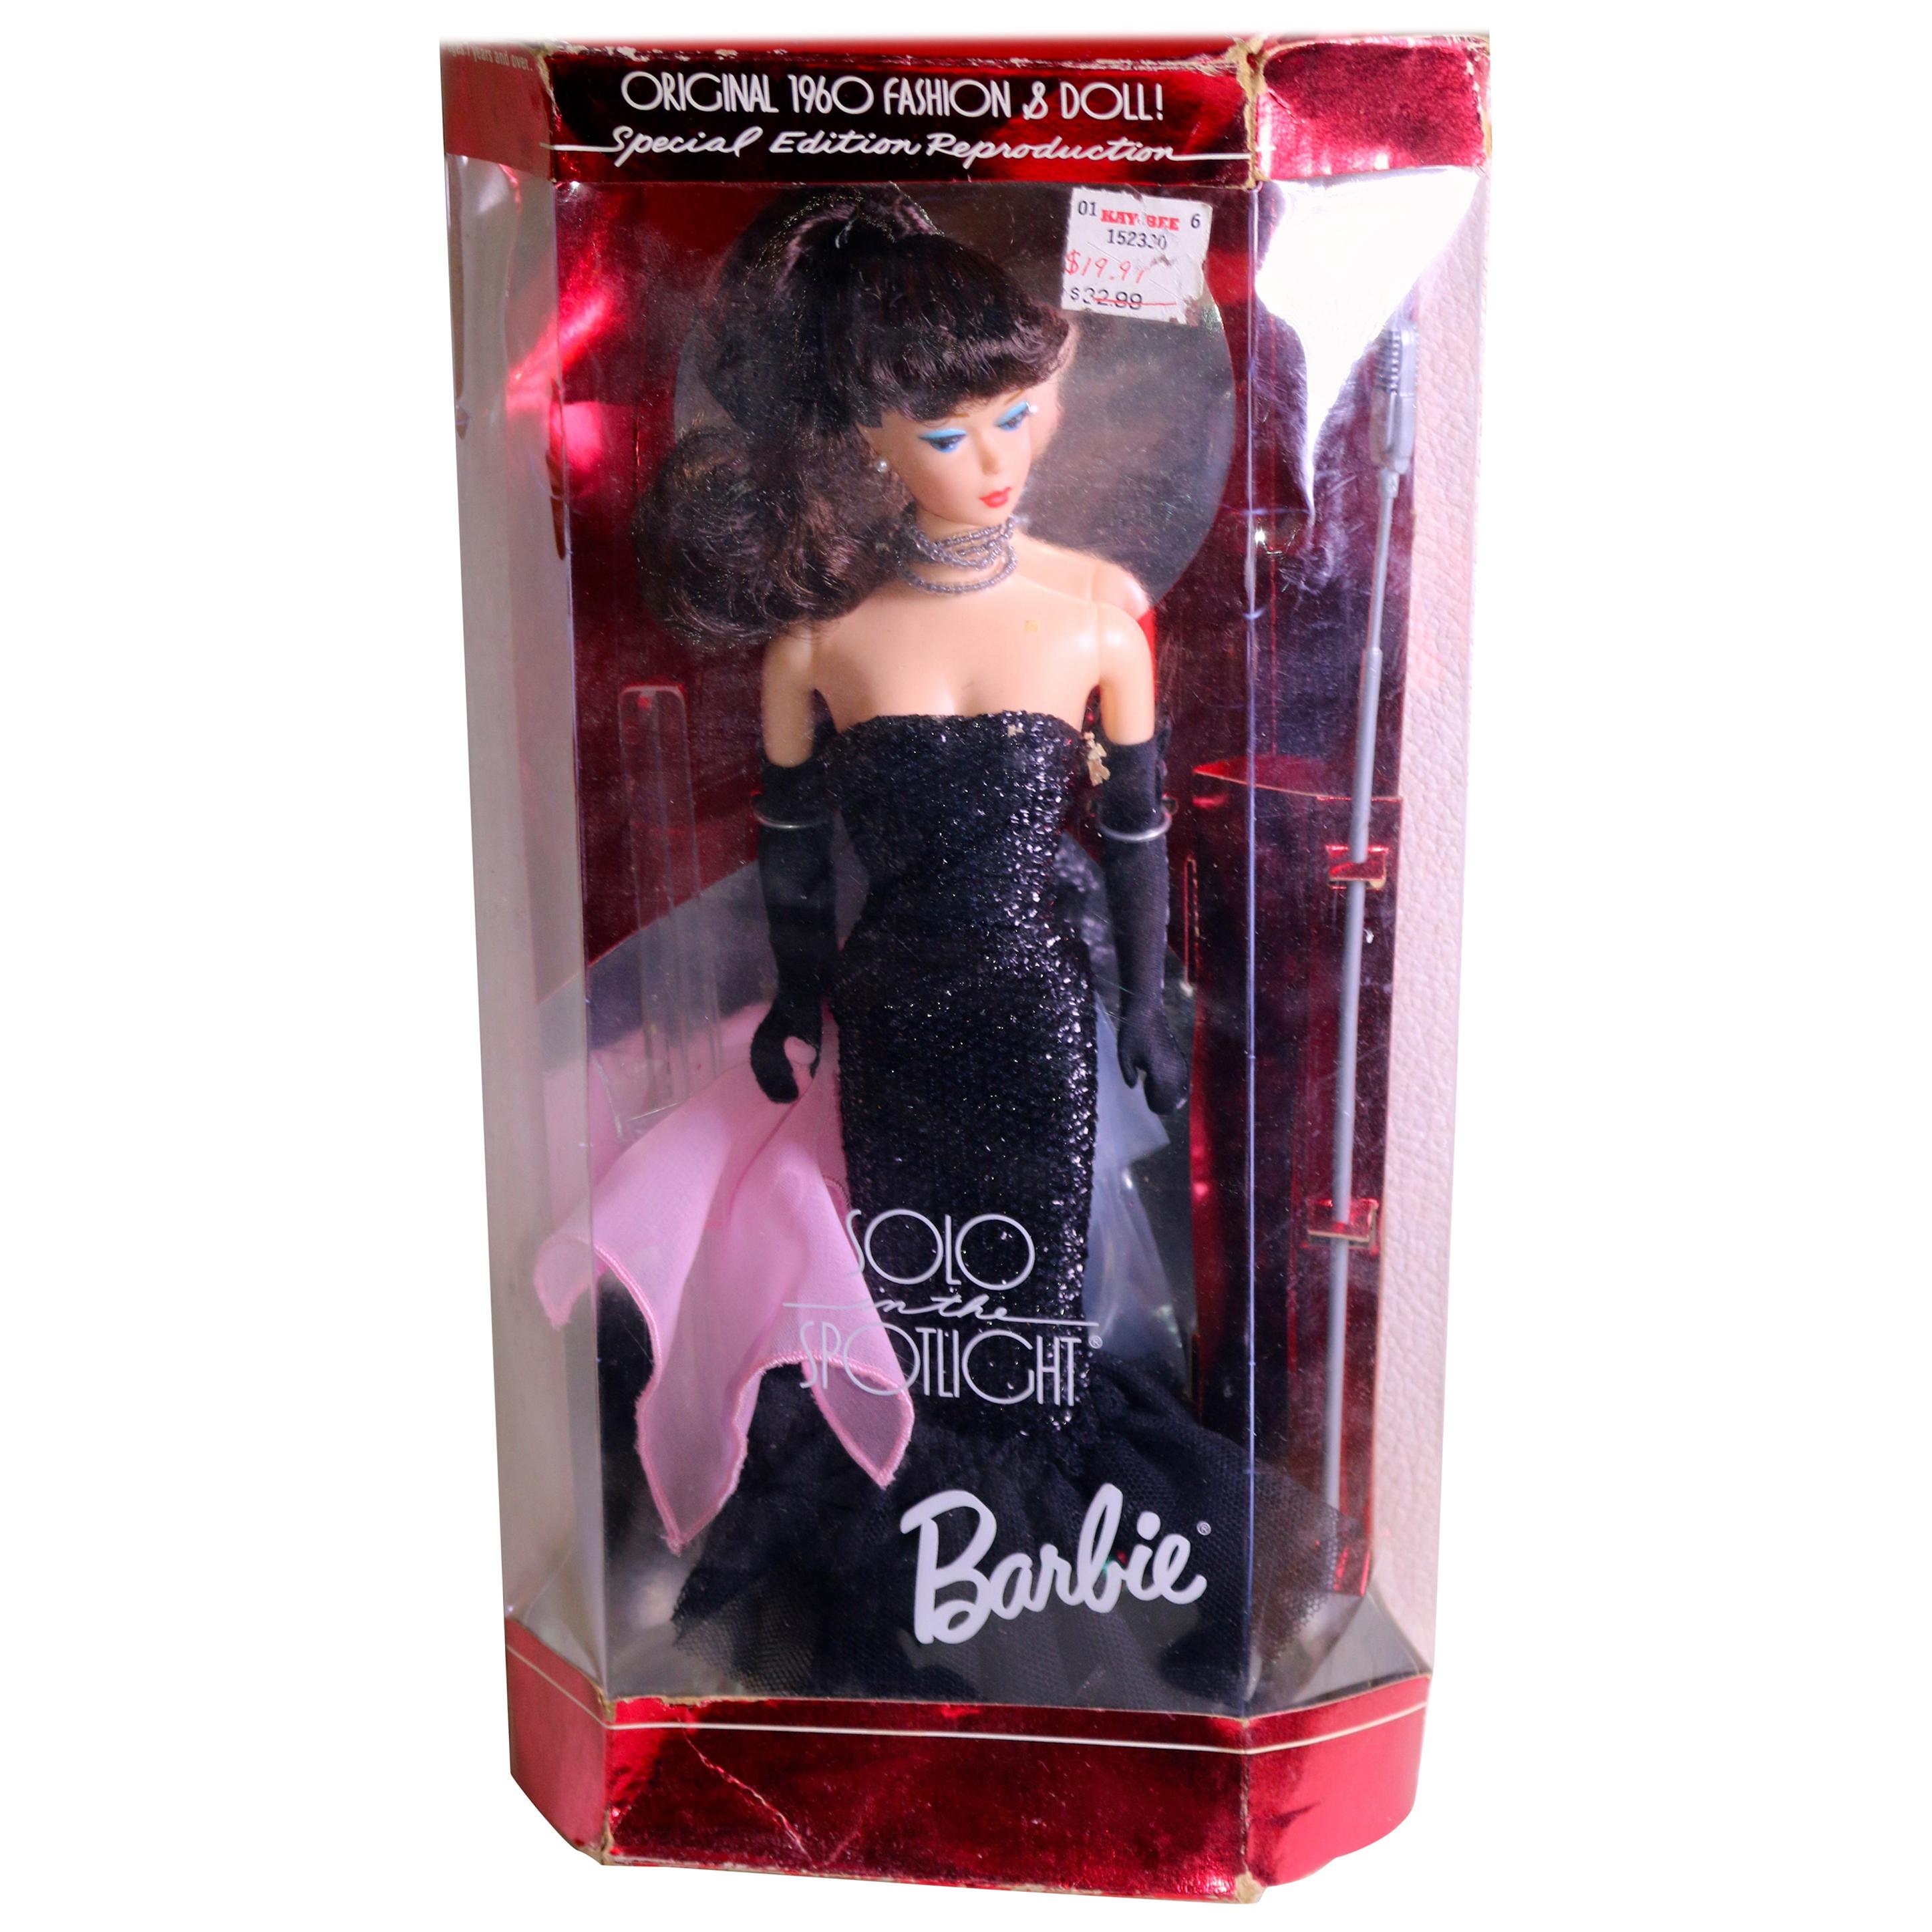 Solo In The Spotlight Brunette 1960 Barbie Doll For Sale